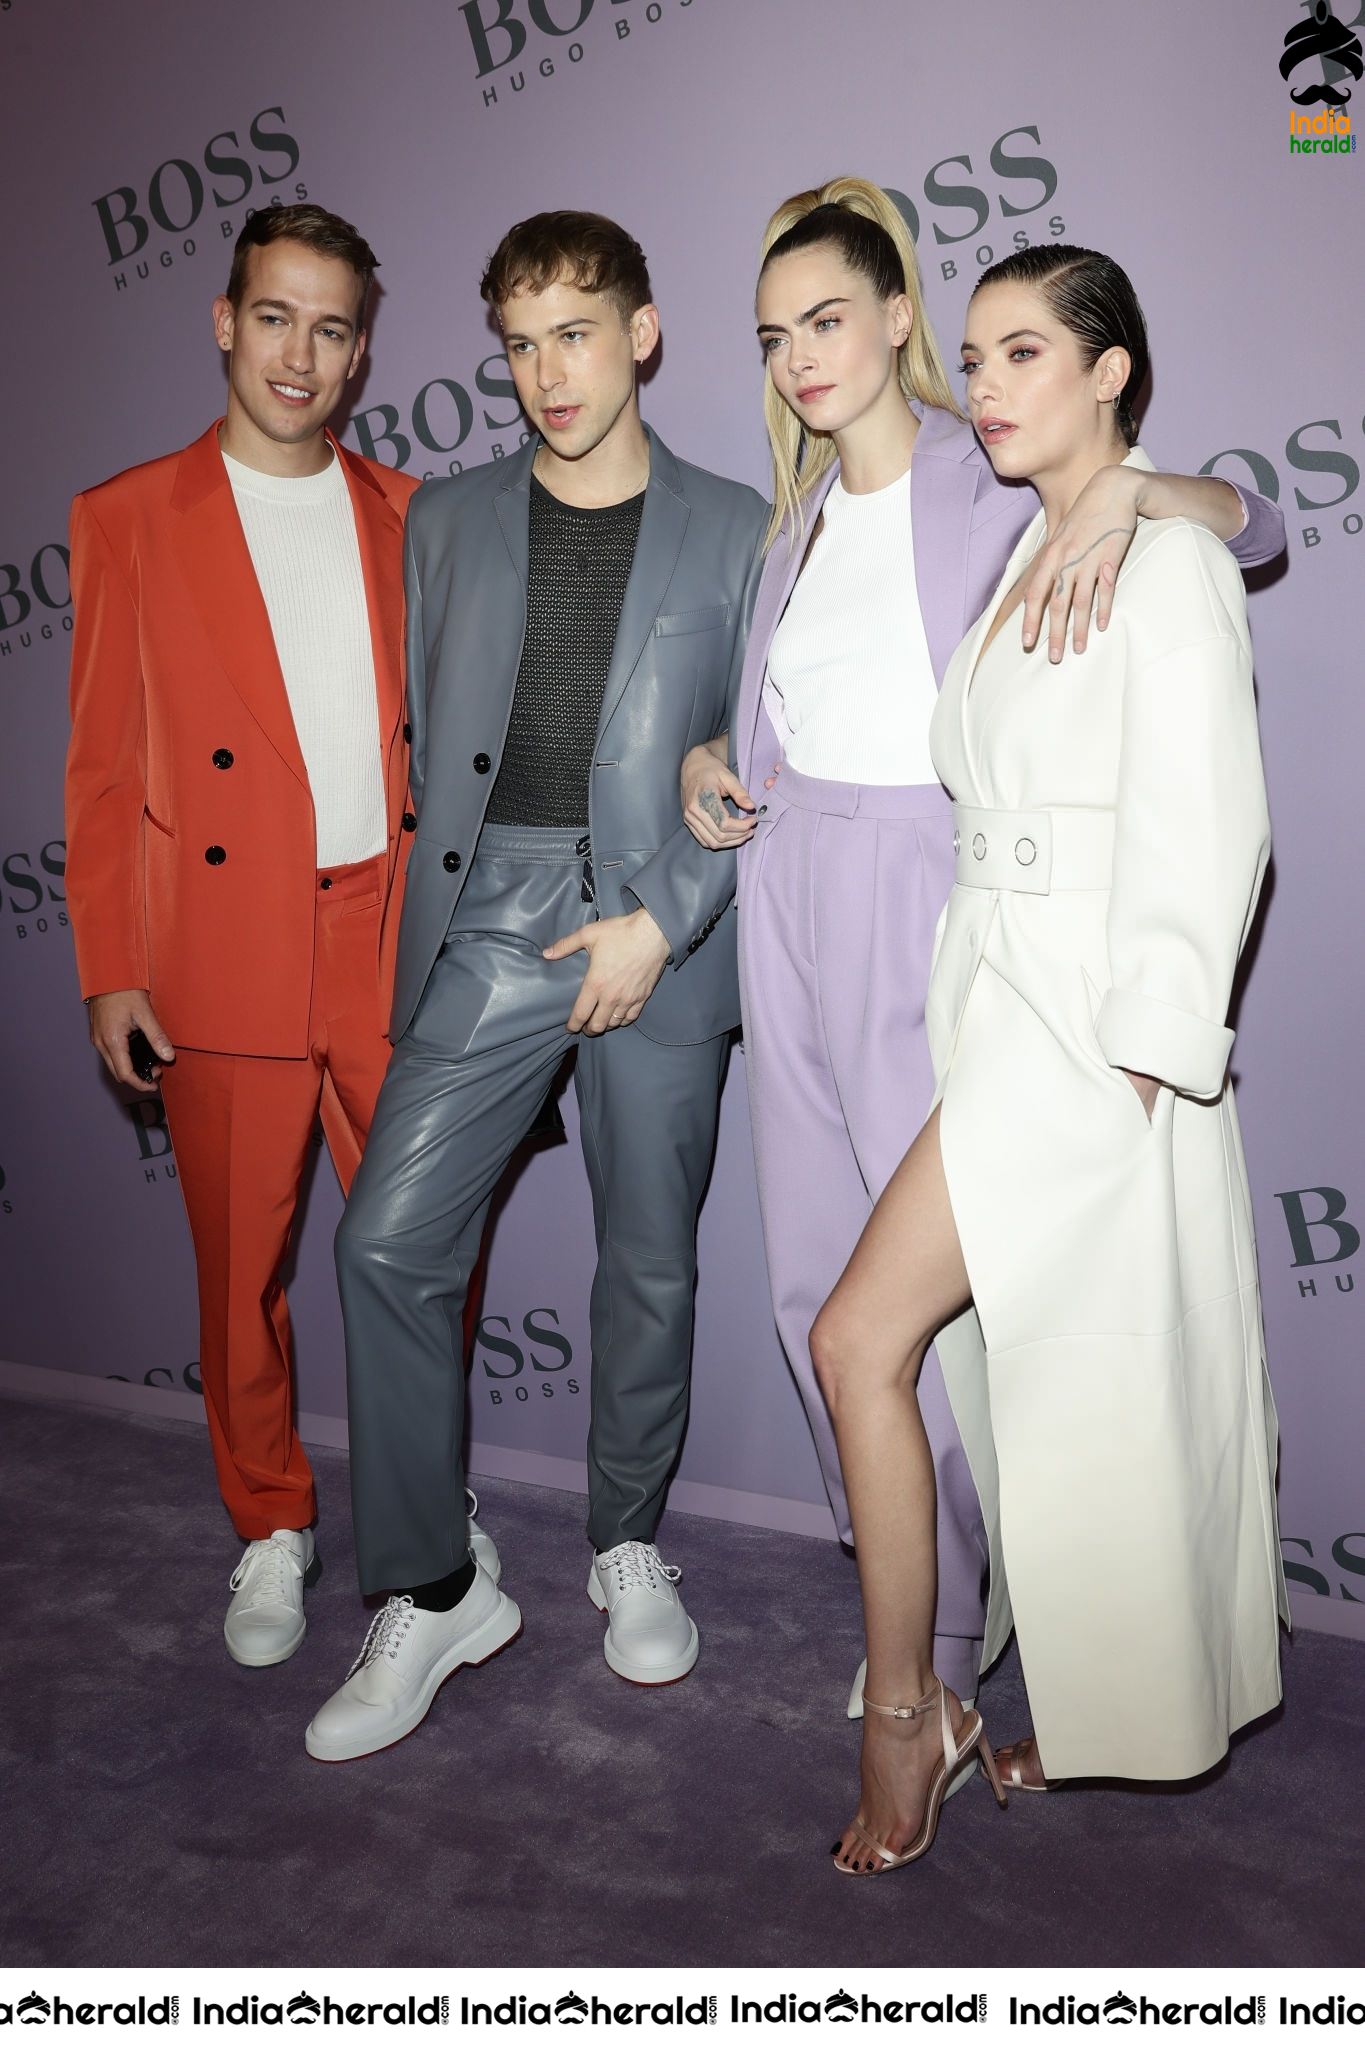 Ashley Benson in BOSS show at Milan Fashion Week